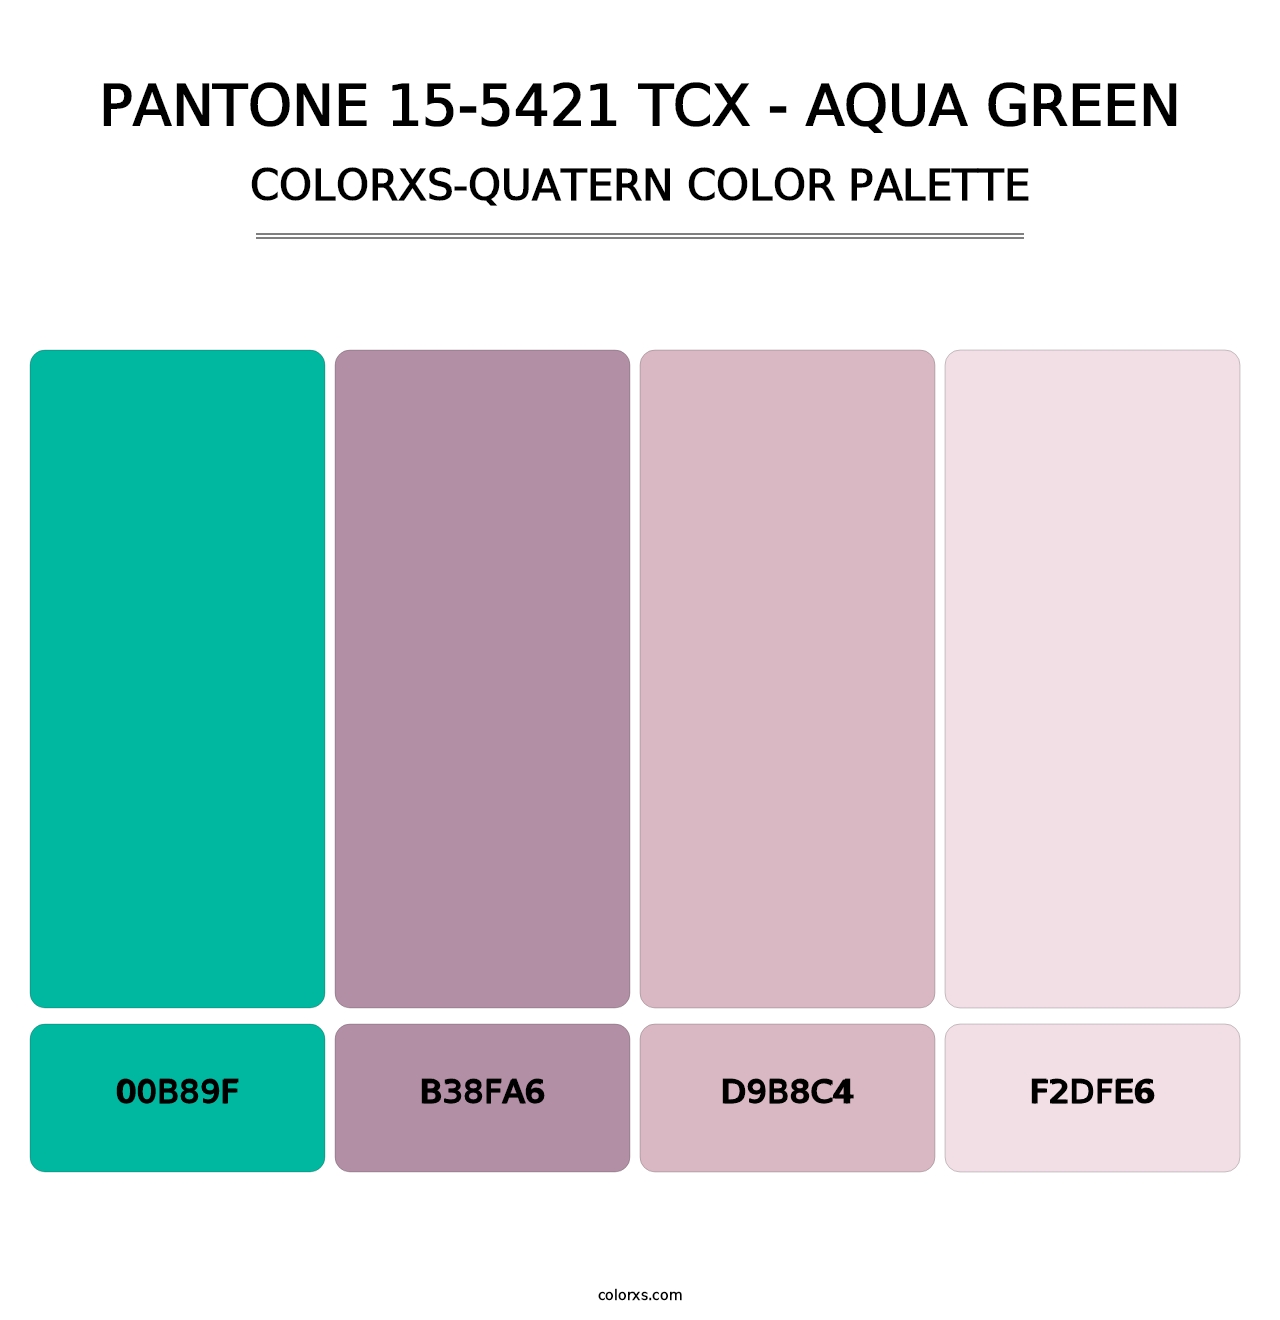 PANTONE 15-5421 TCX - Aqua Green - Colorxs Quatern Palette